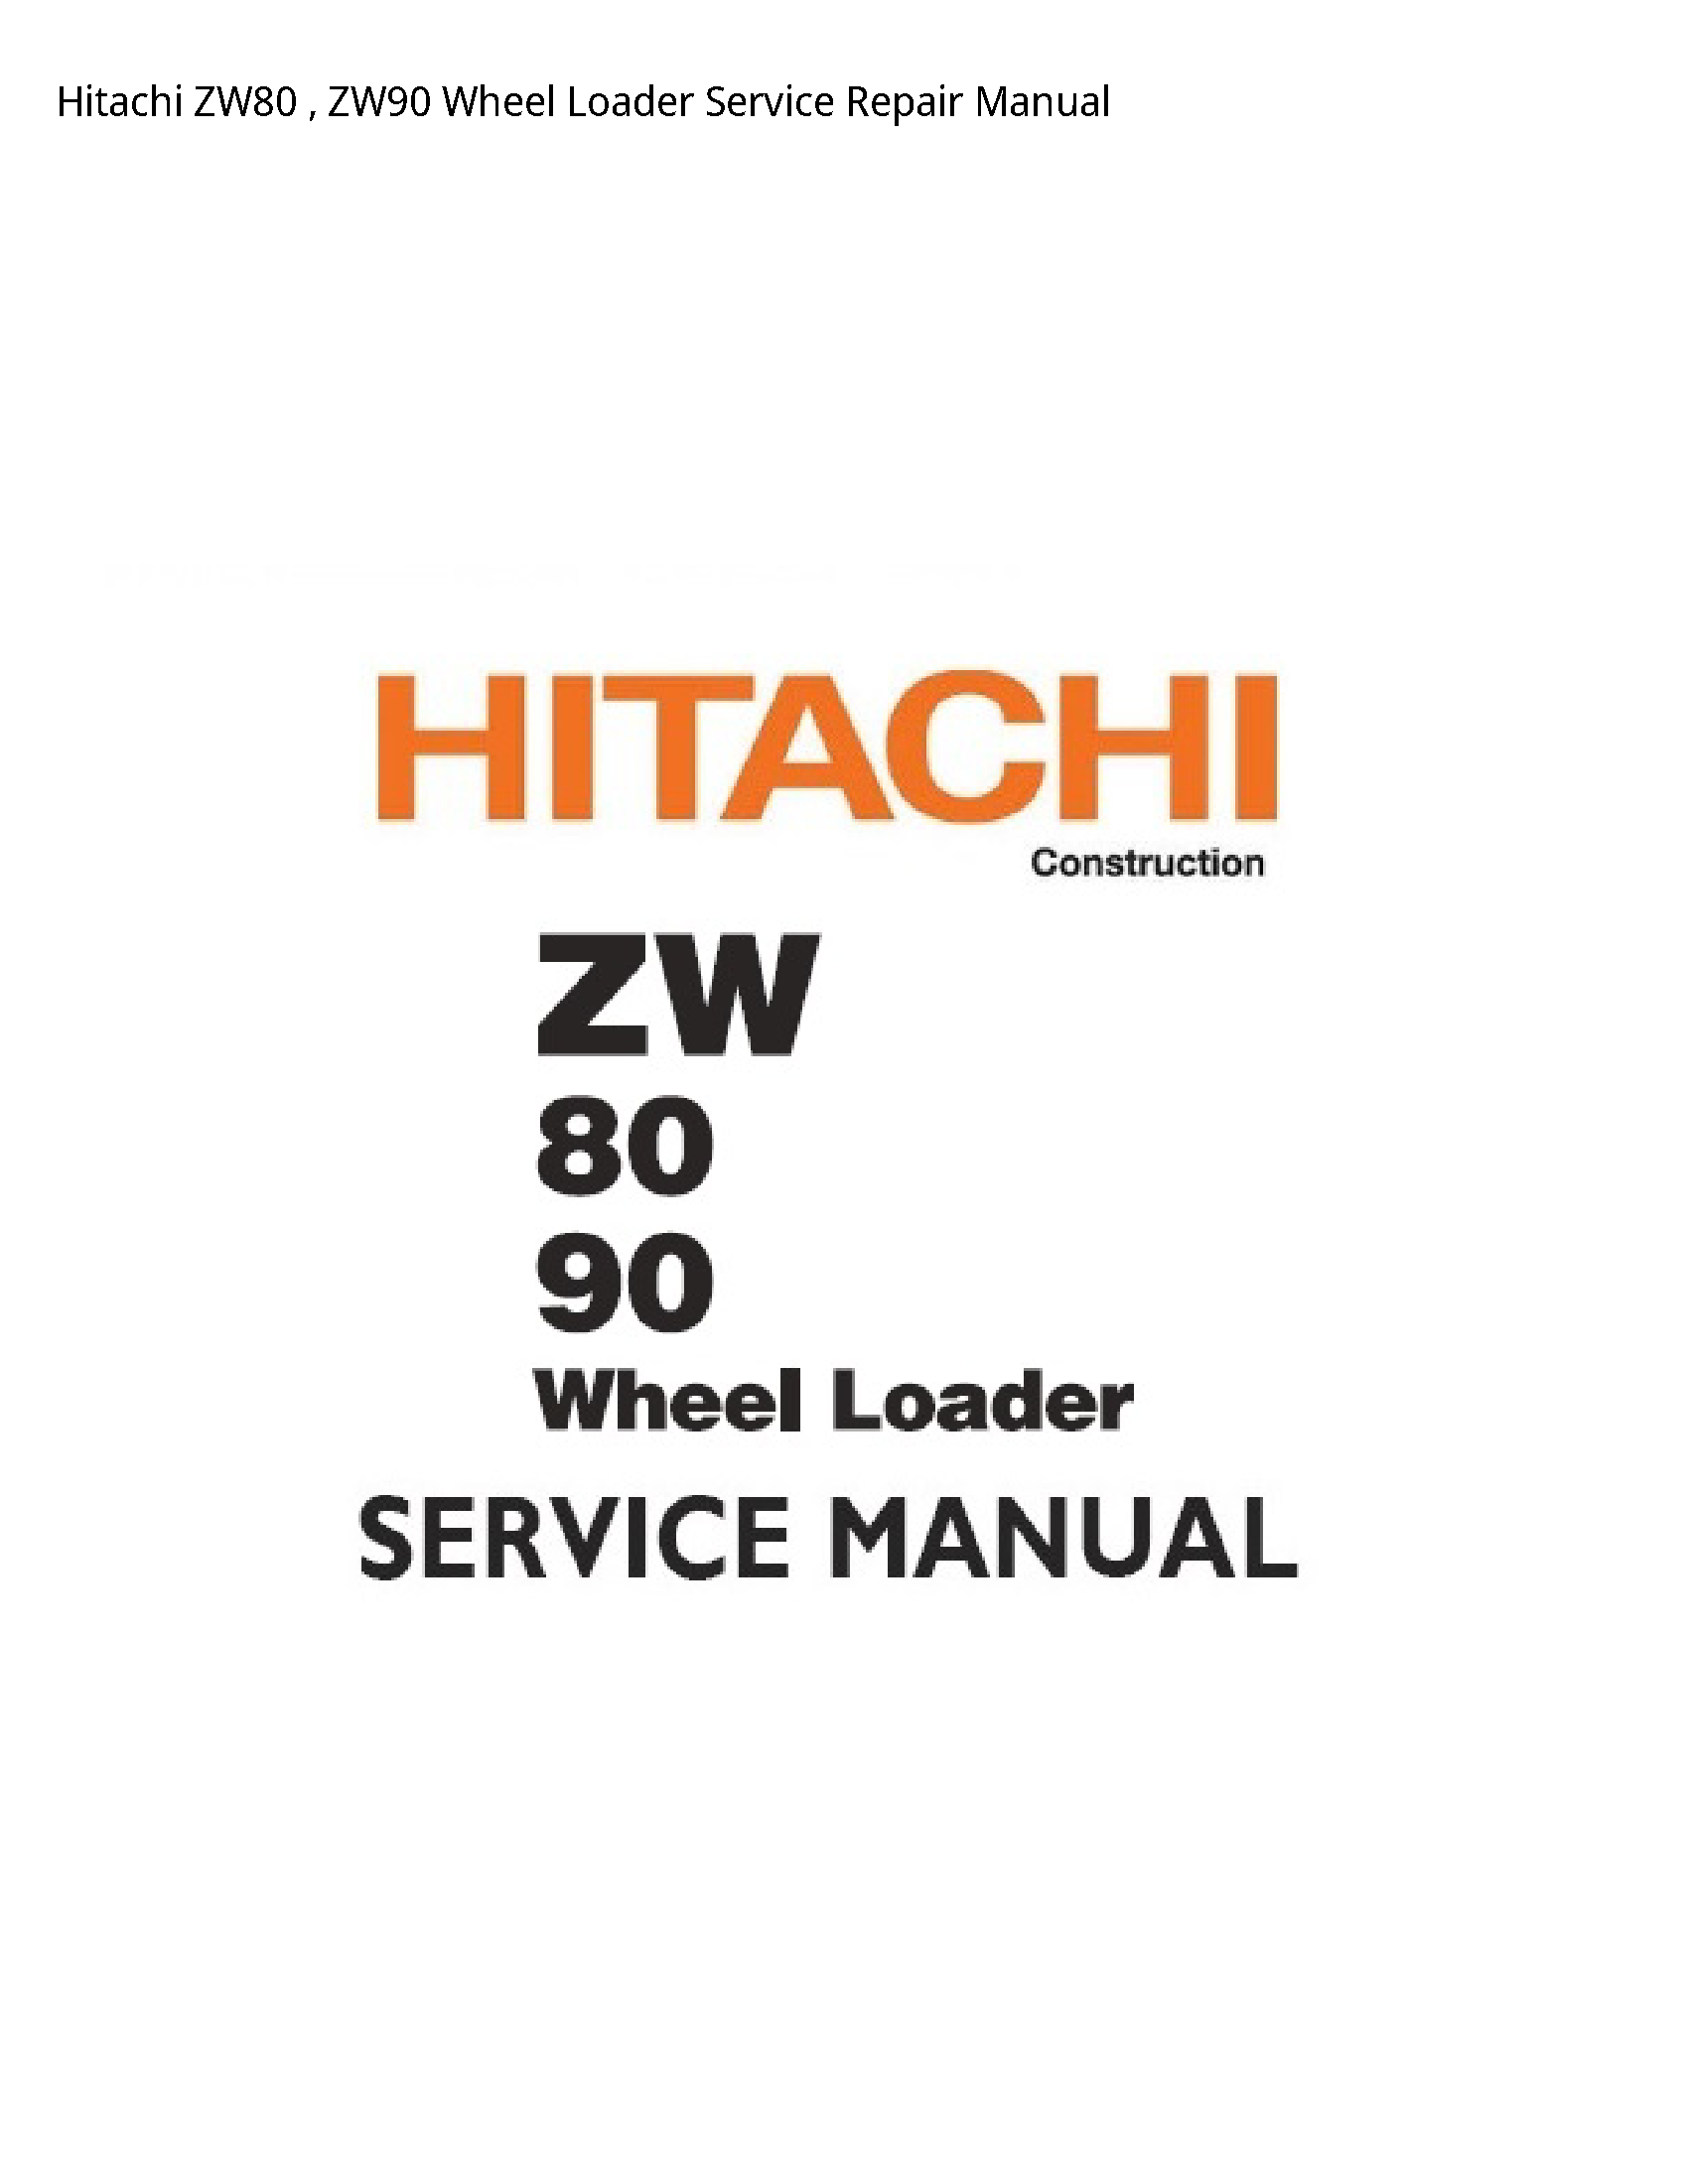 Hitachi ZW80 Wheel Loader manual